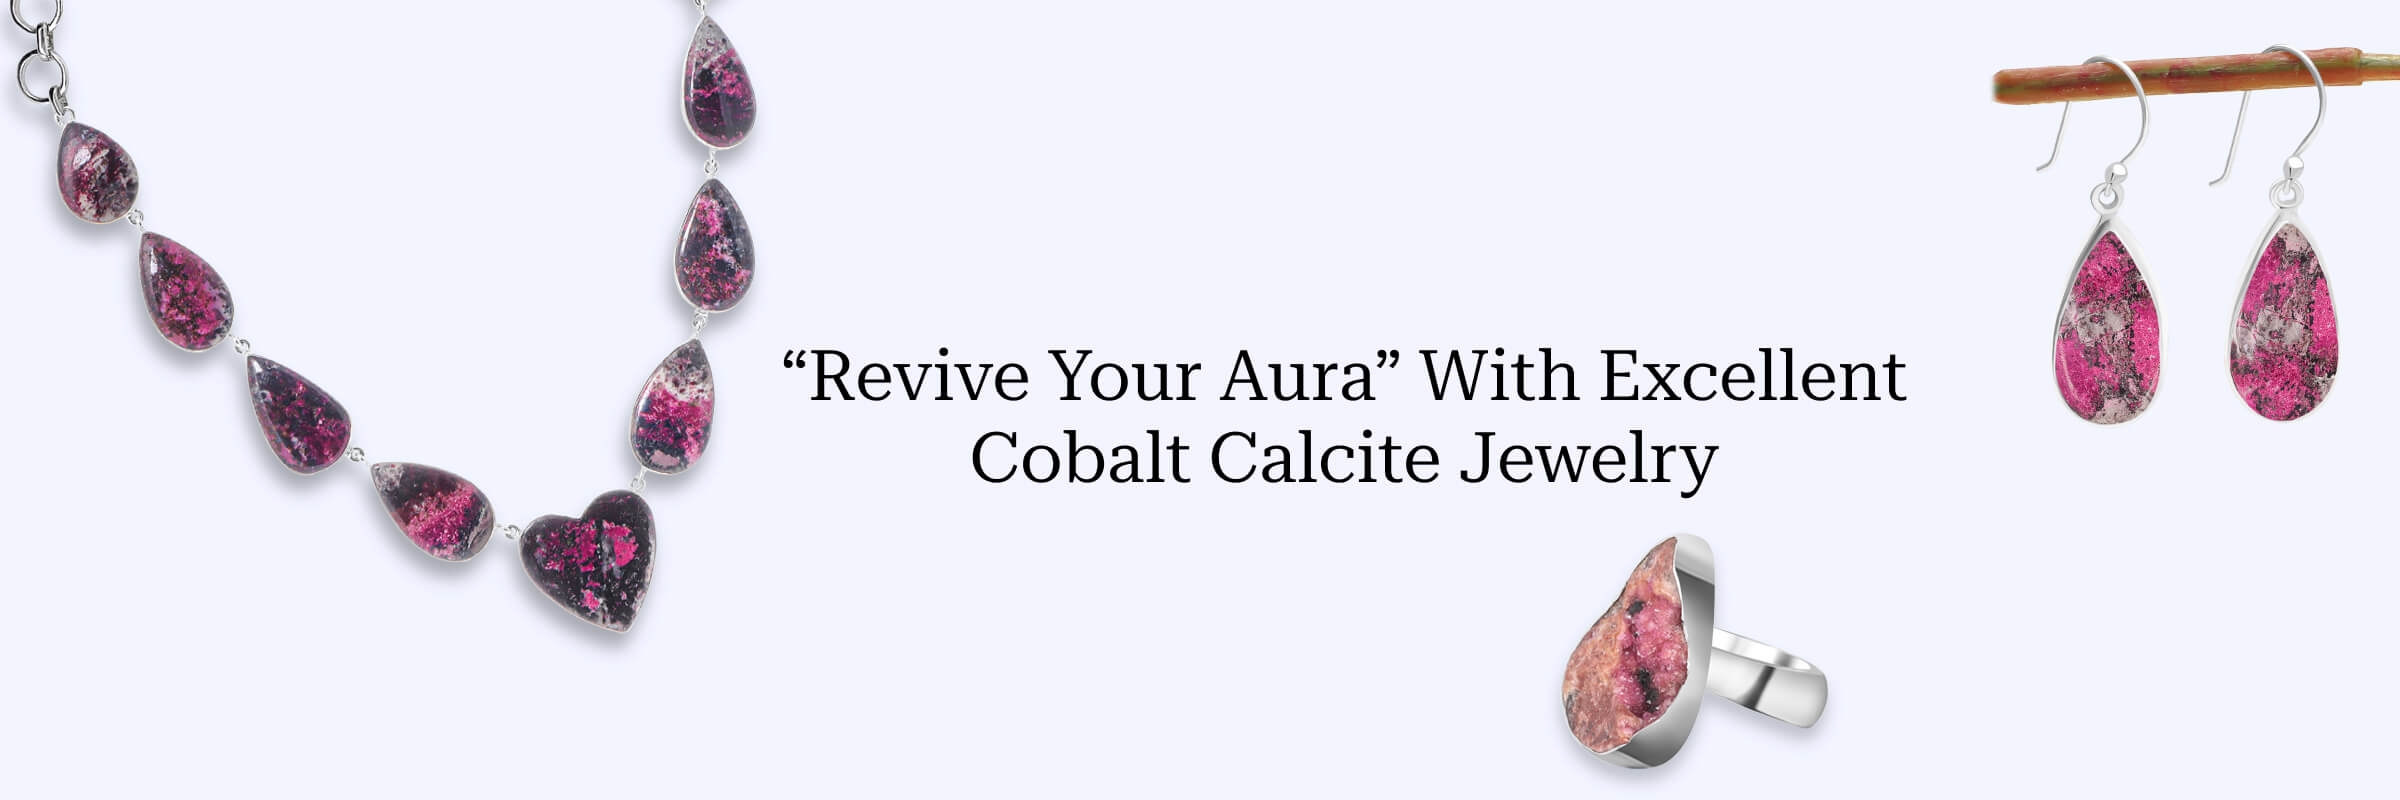 Cobalt Calcite Jewelry